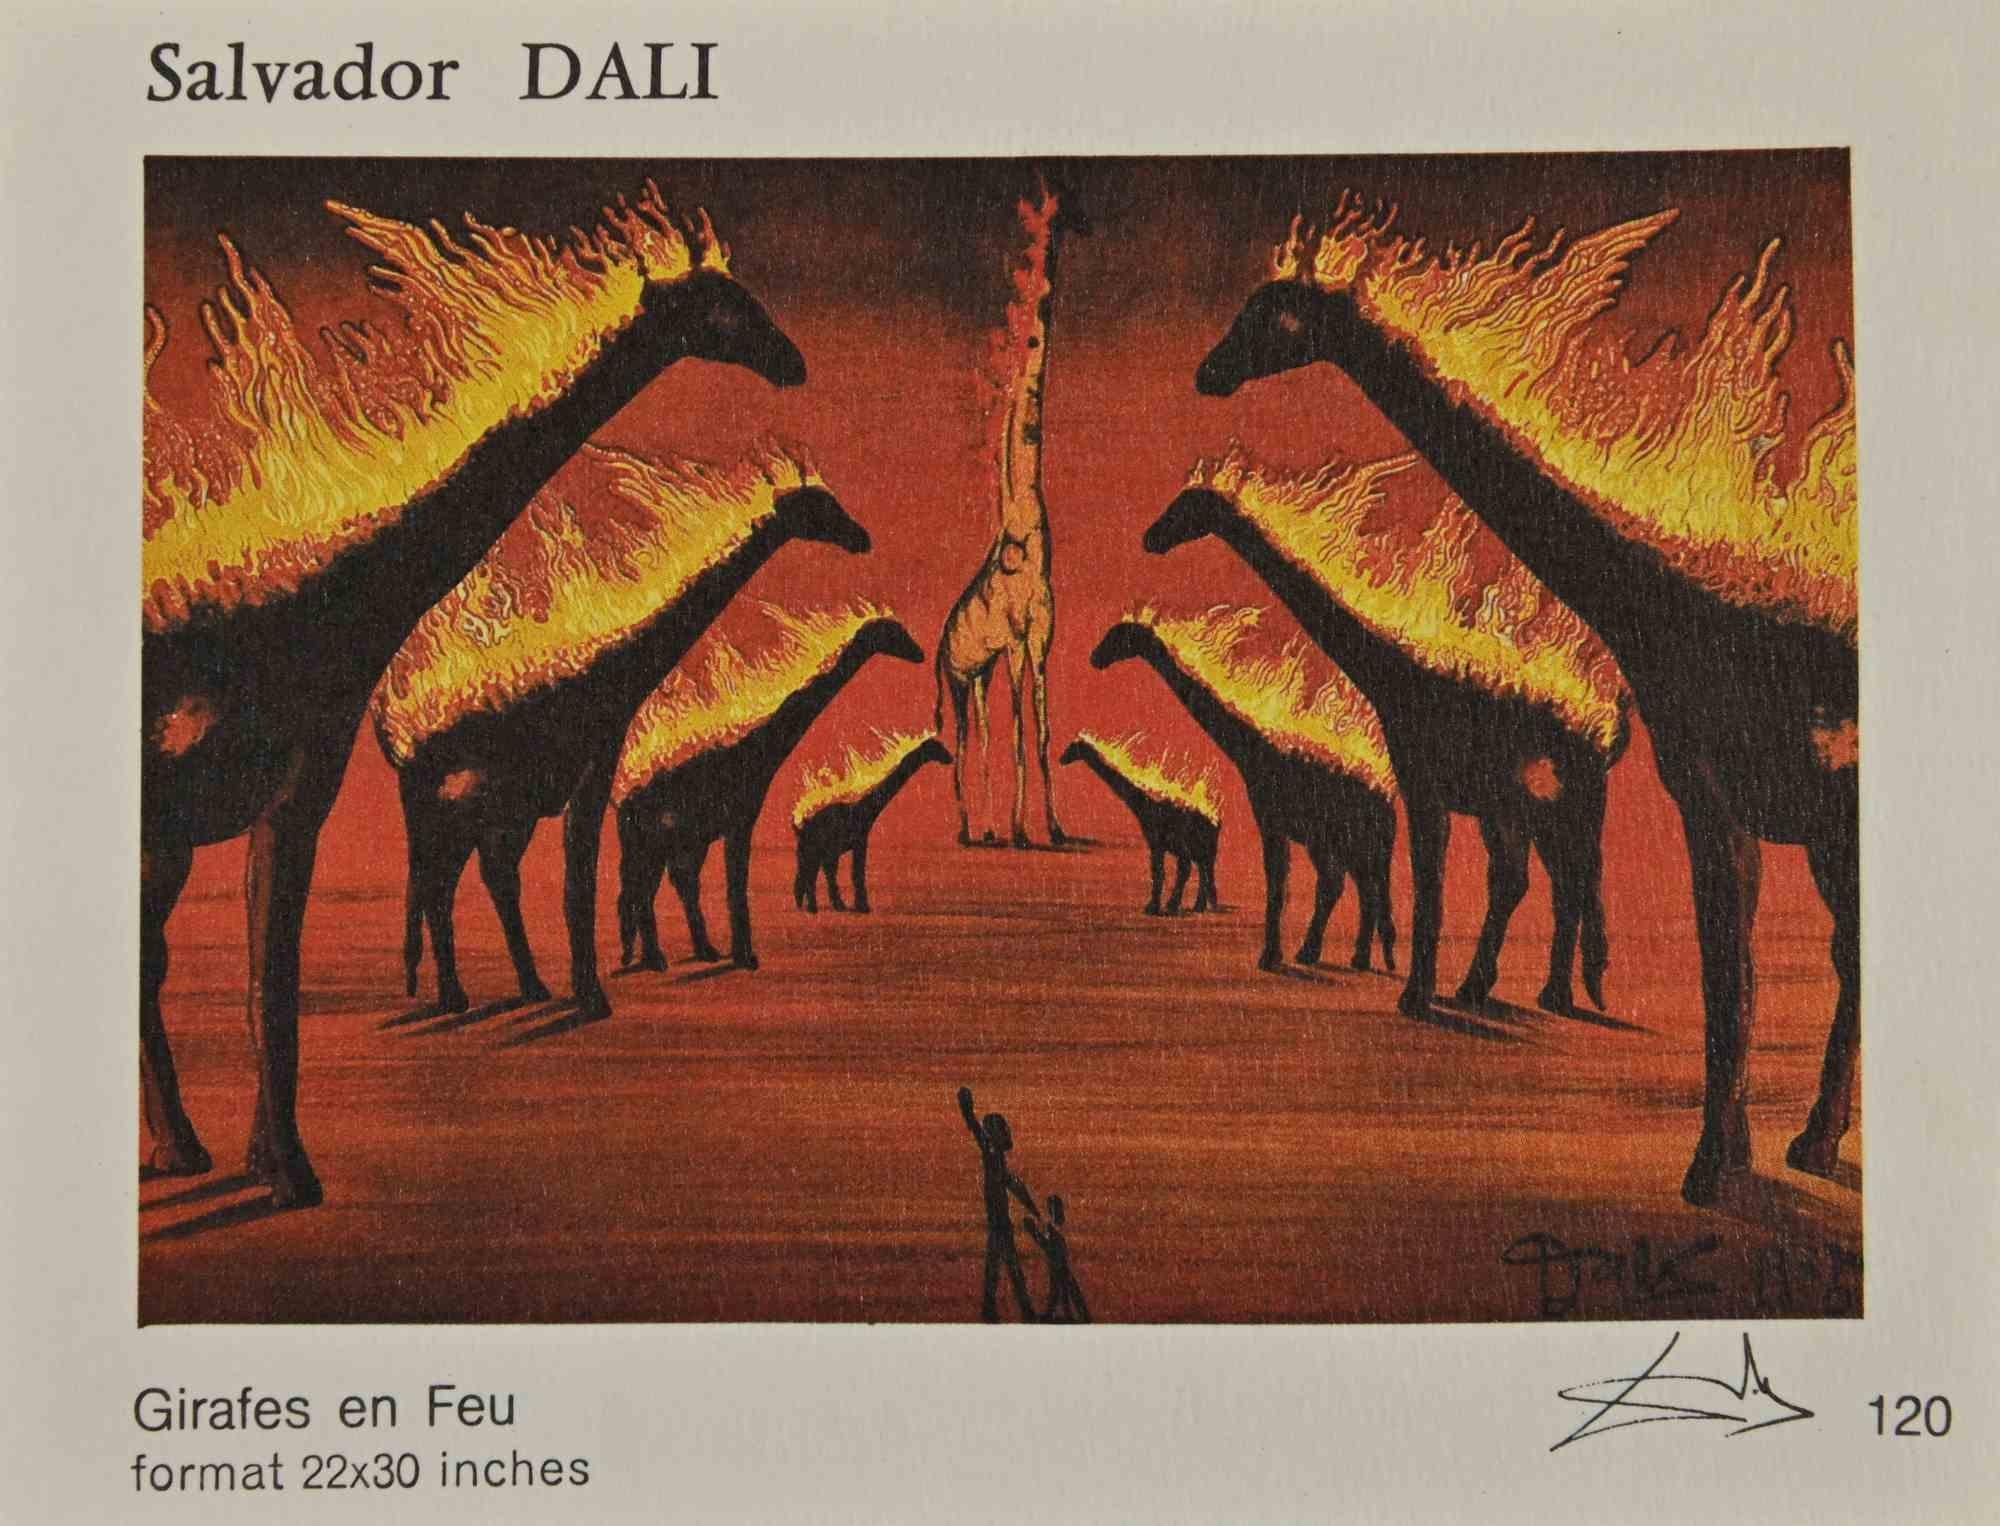 Collection of Vintage Cards After Salvador Dalì - 1980s For Sale 4